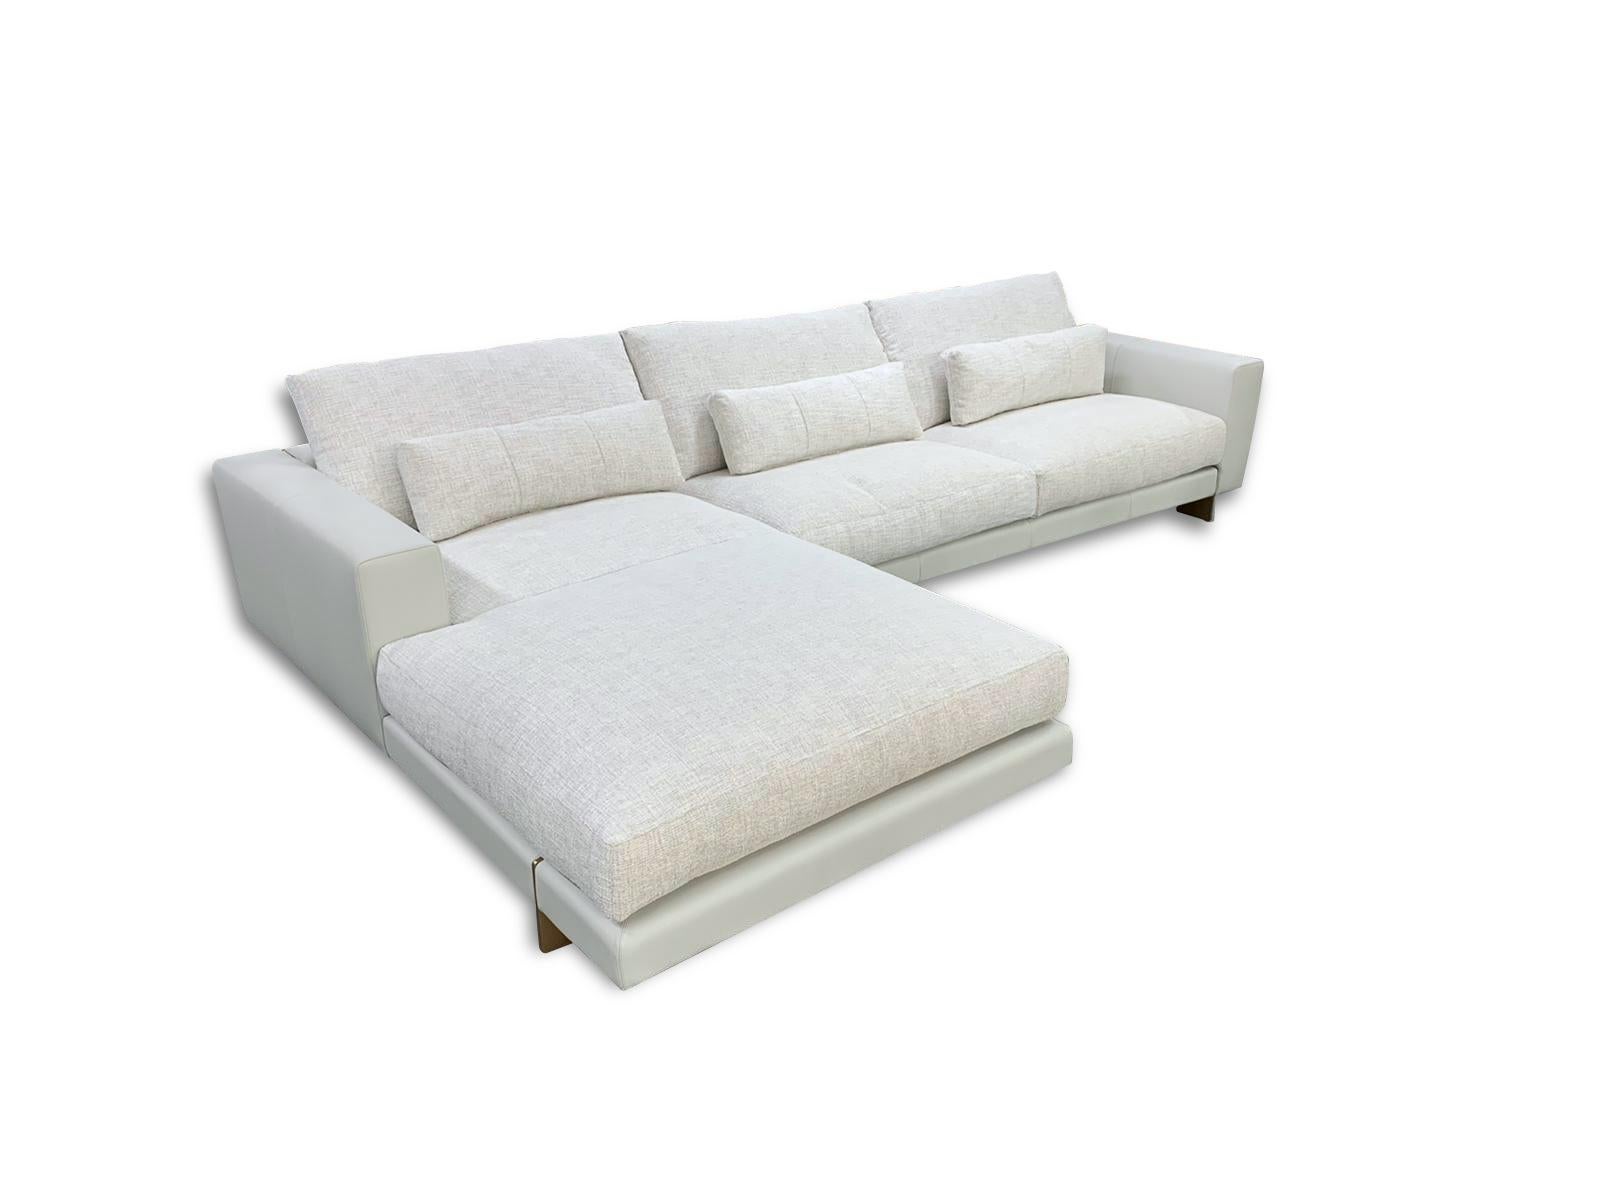 DIVO Sectional Contemporary Sofa In New Condition For Sale In Miami, FL